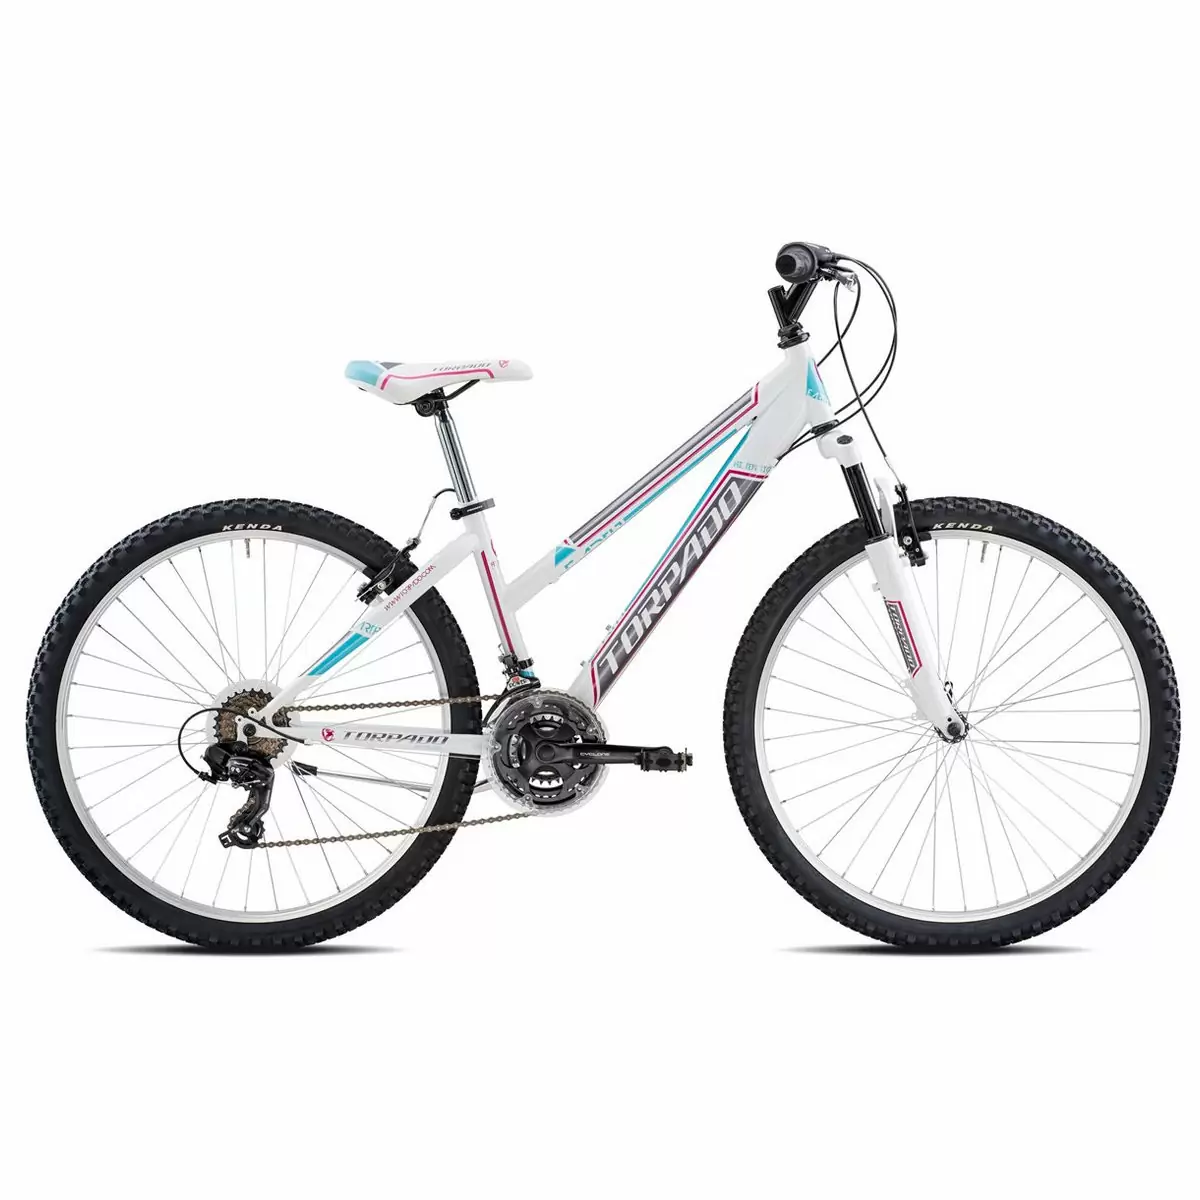 Bicicleta mtb feminina T596 earth 26'' 3x7v tamanho 44 branco azul claro - image